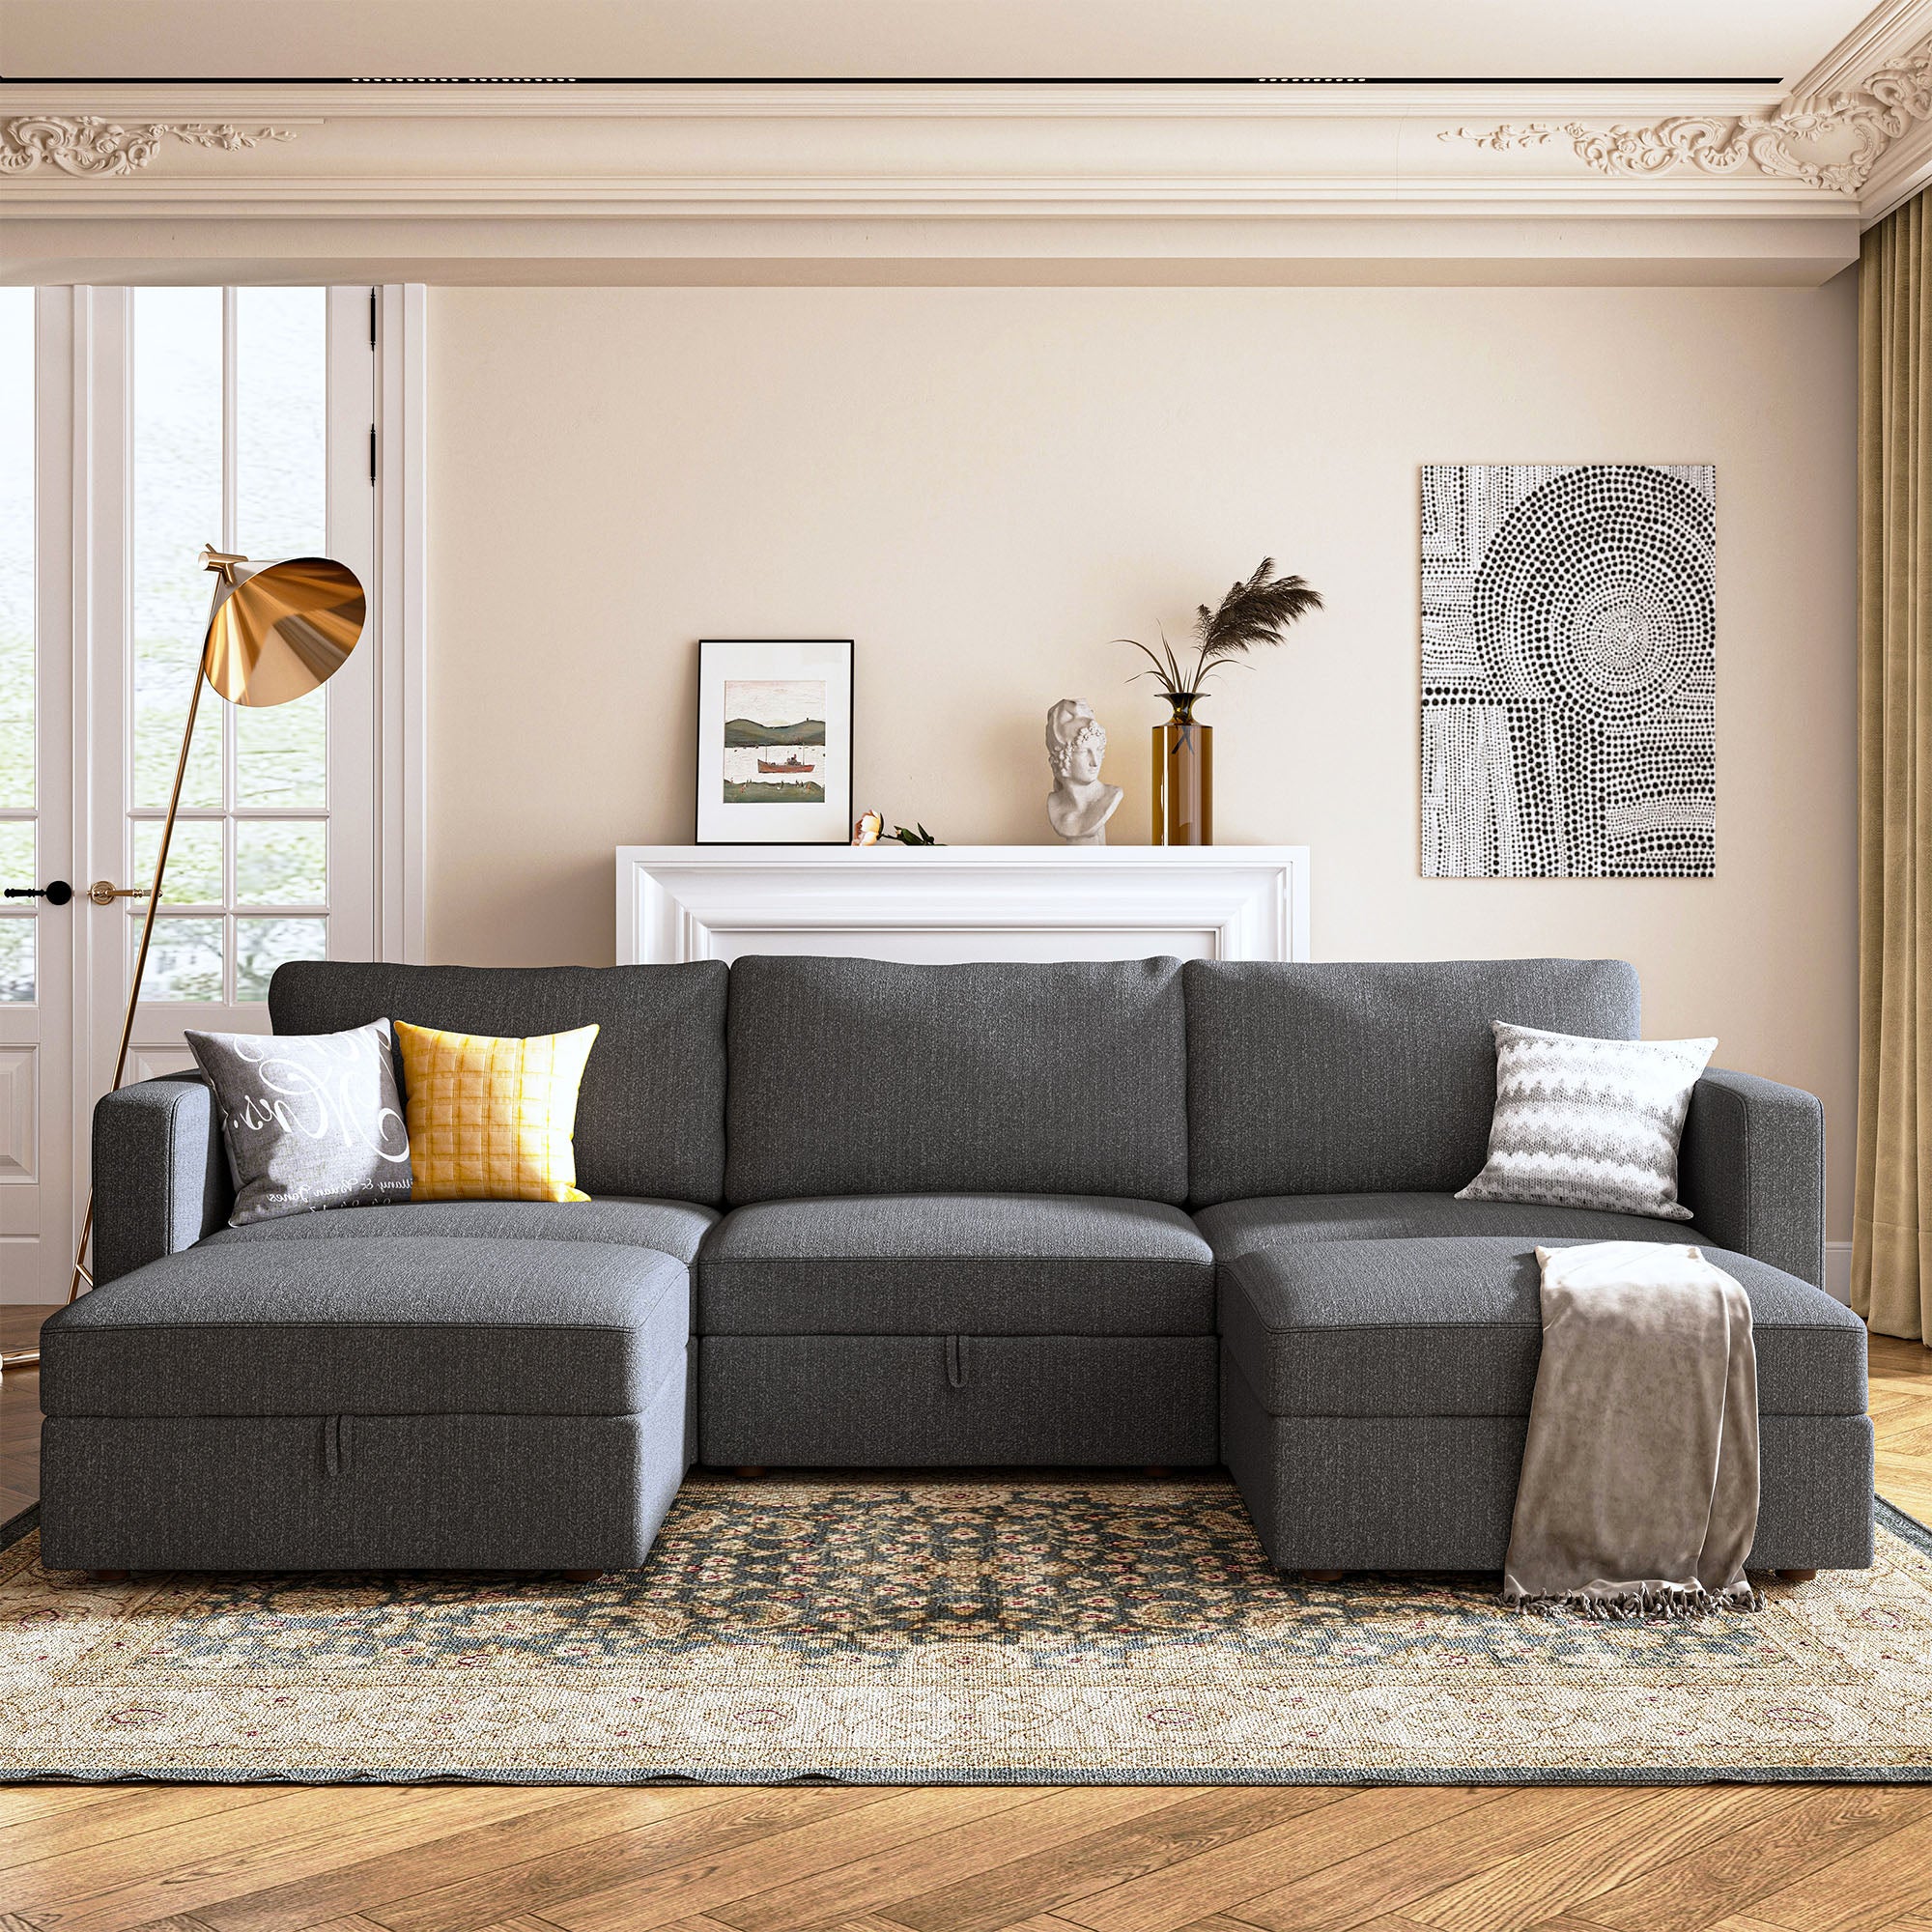 HONBAY Dark Grey Fabric Symmetrical U-shaped Modular Sofa Couch for Living Room